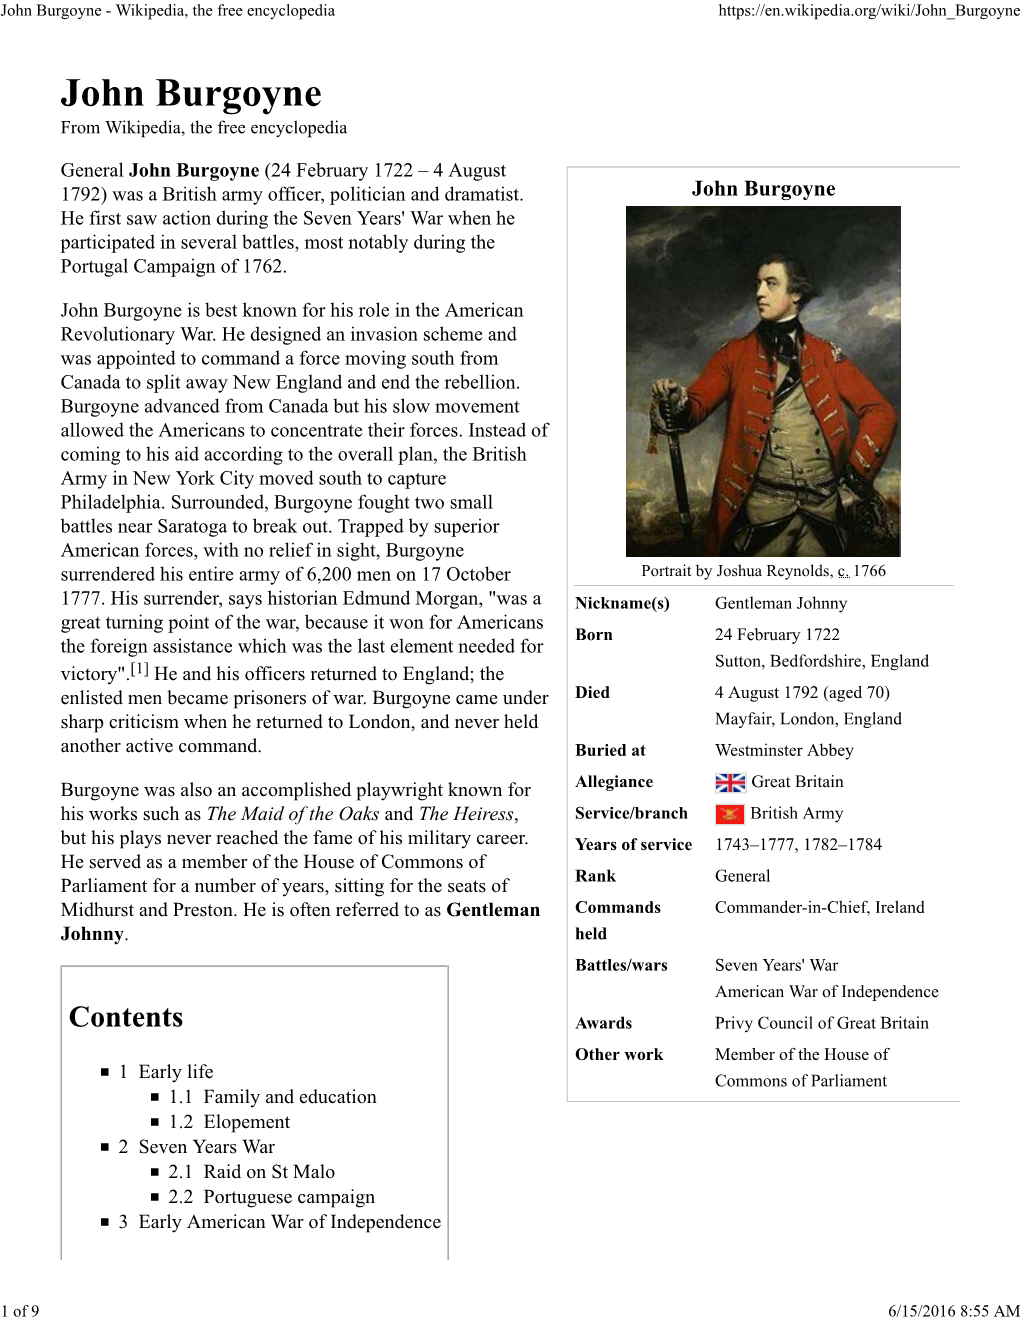 John Burgoyne - Wikipedia, the Free Encyclopedia